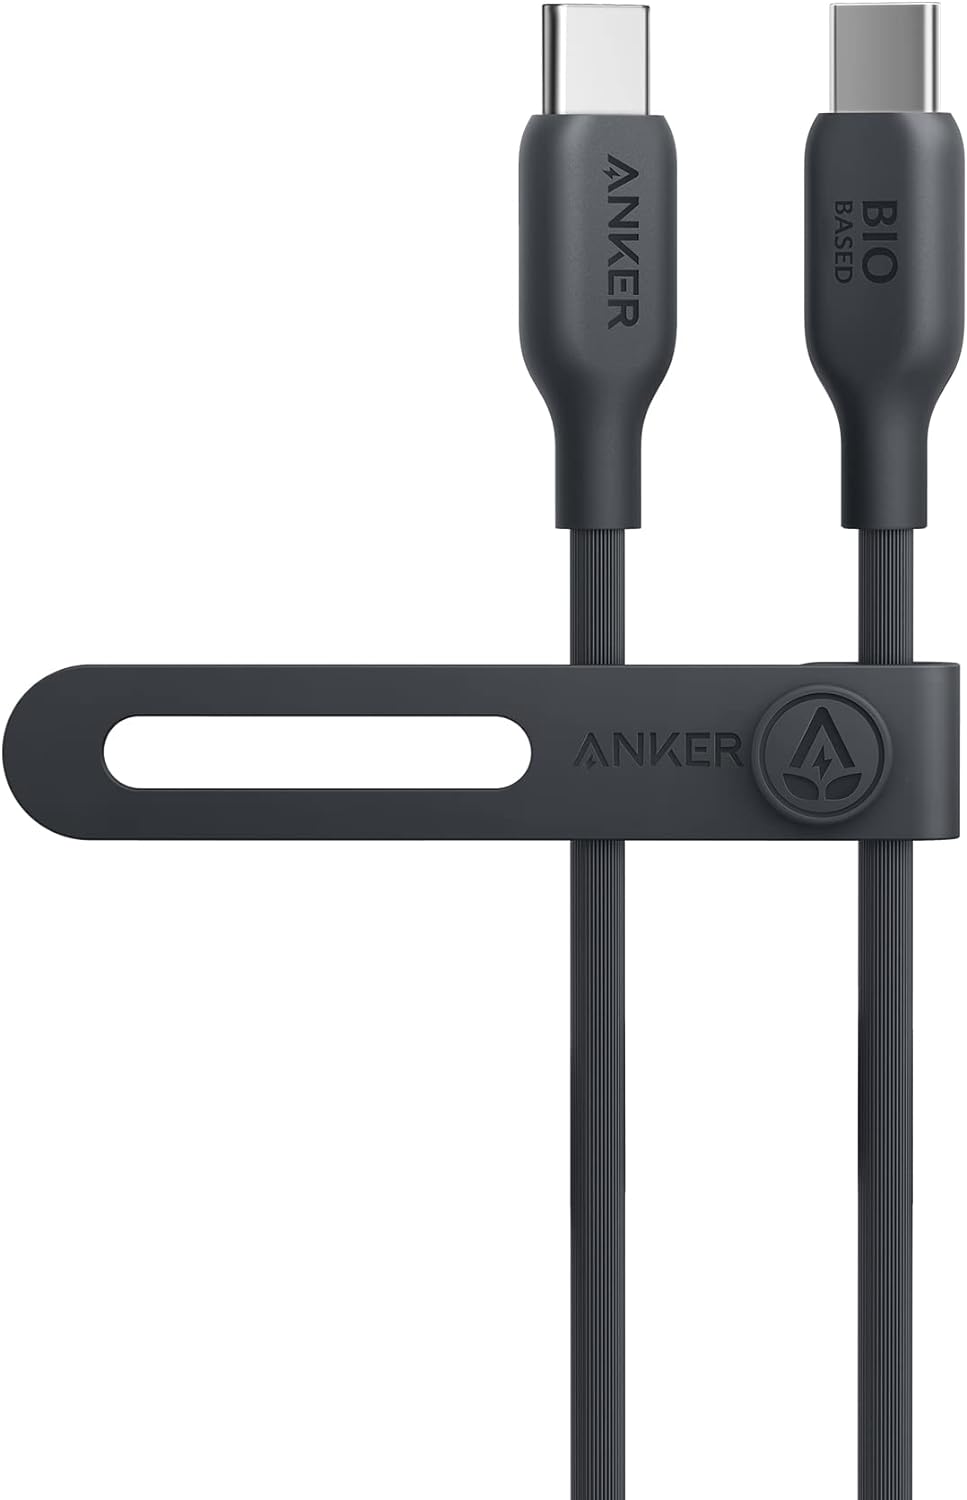 Anker 544 USB-C to USB-C Cable - Miles Telecom Trading LLC